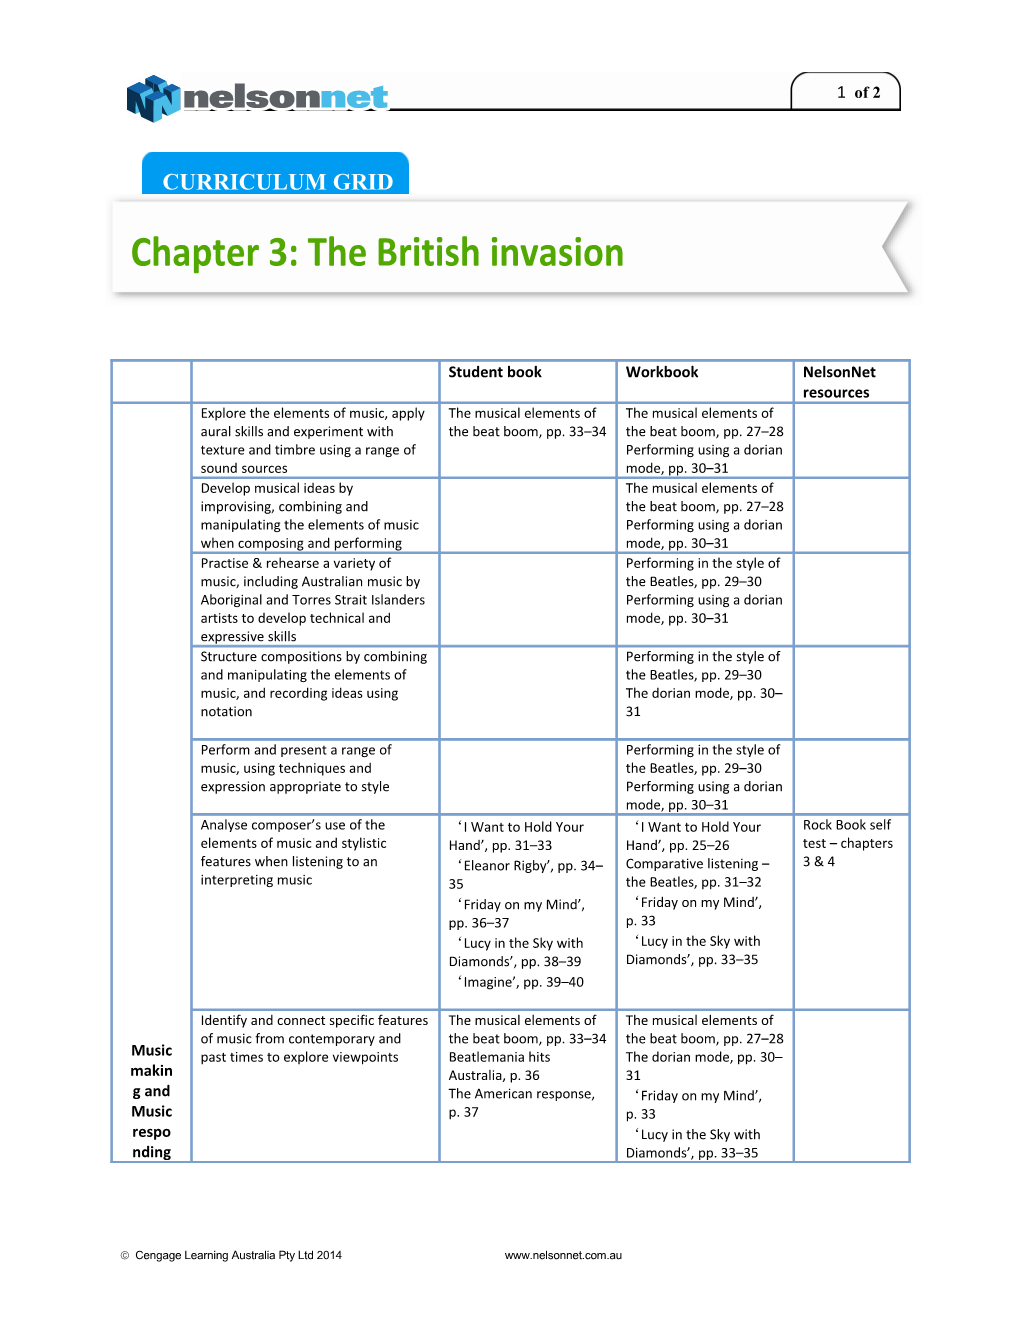 Chapter 3: the British Invasion